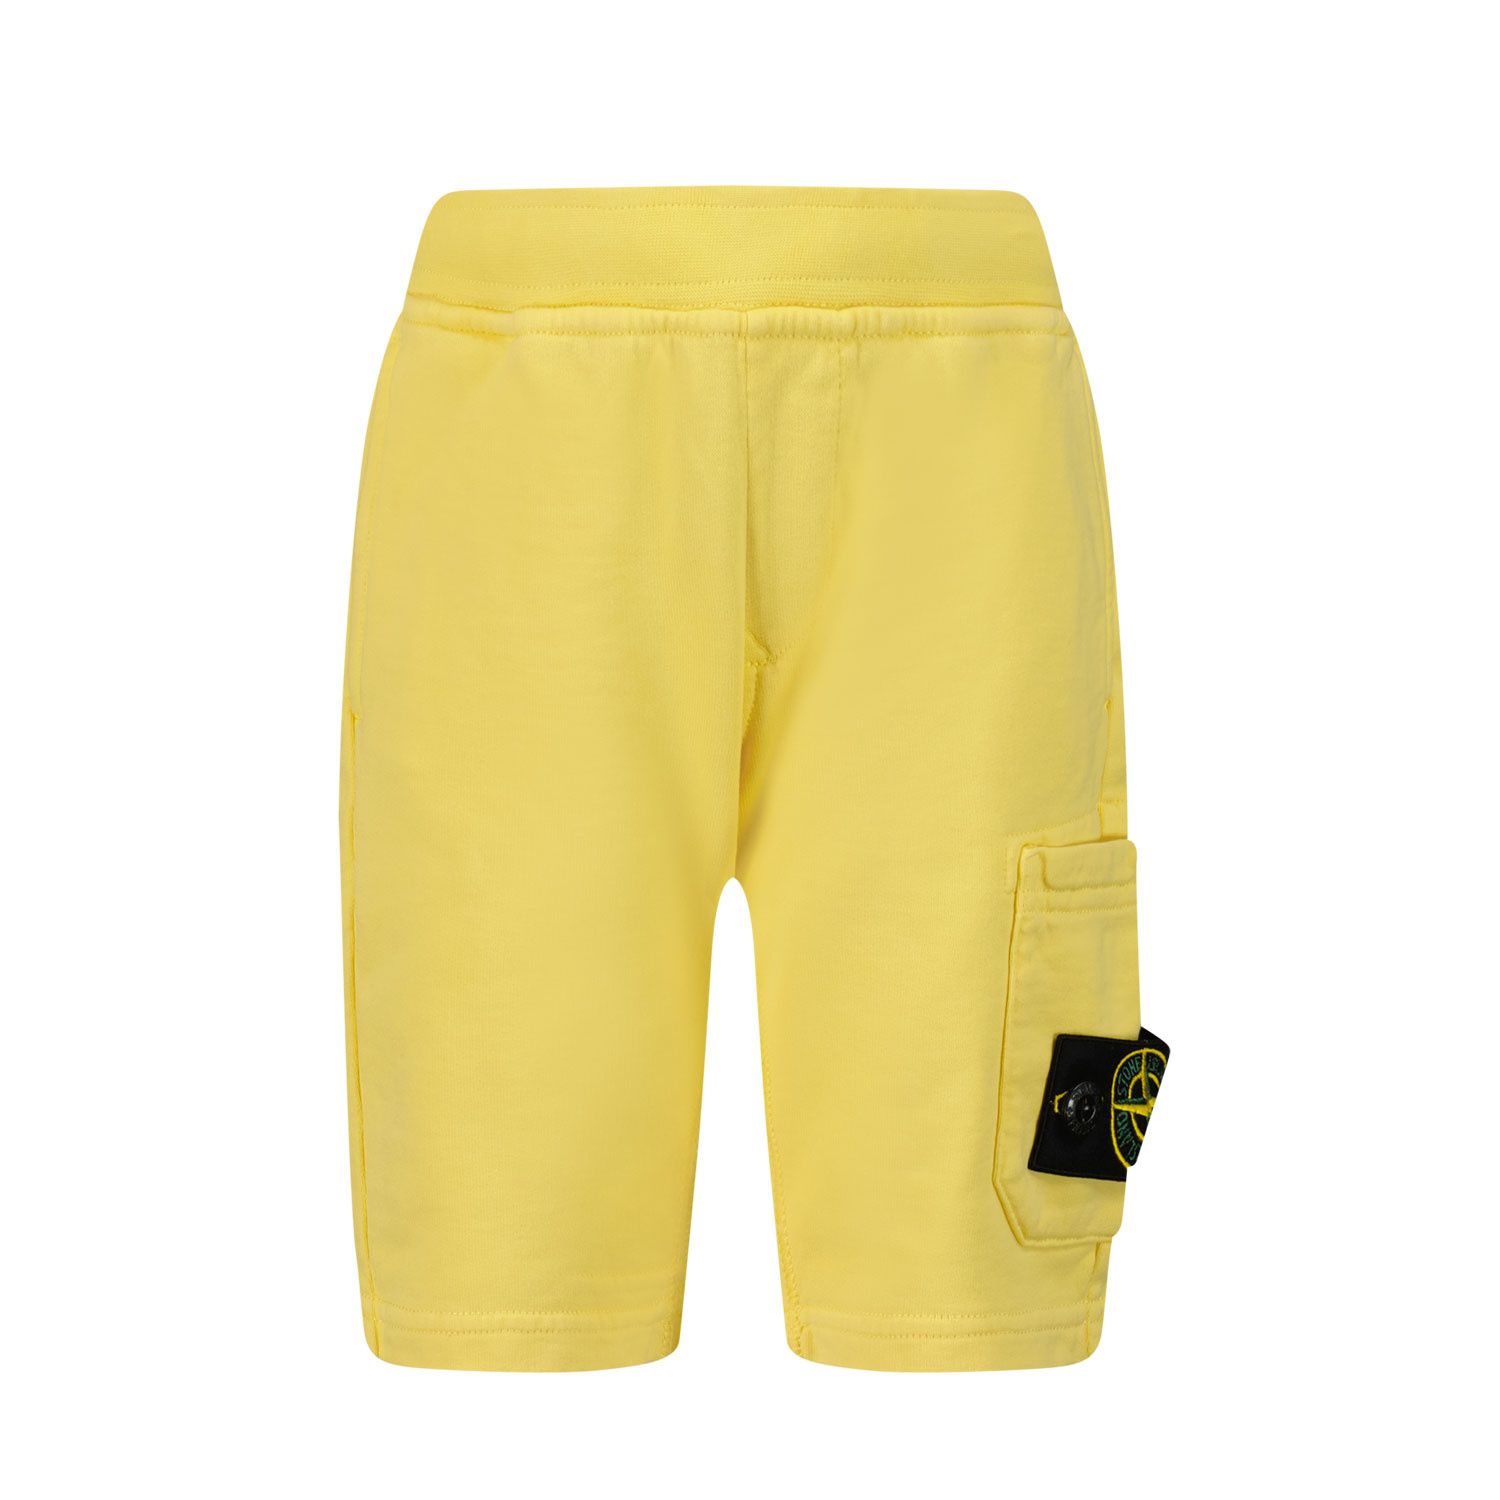 Afbeelding van Stone Island 761661840 kinder shorts geel